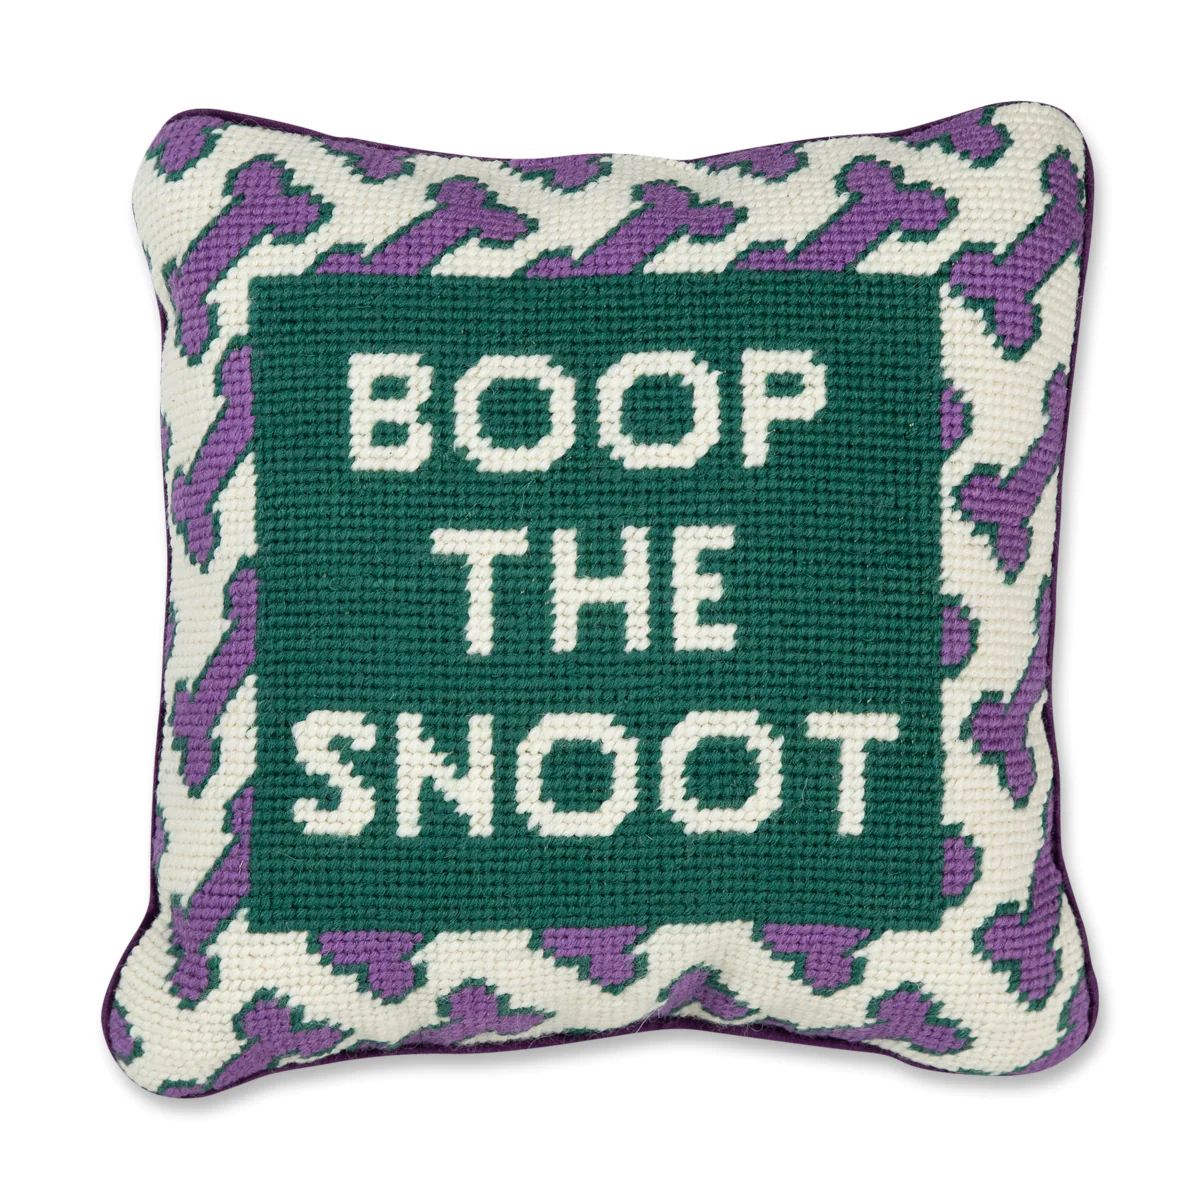 Boop the Snoot Needlepoint Pillow | Furbish Studio